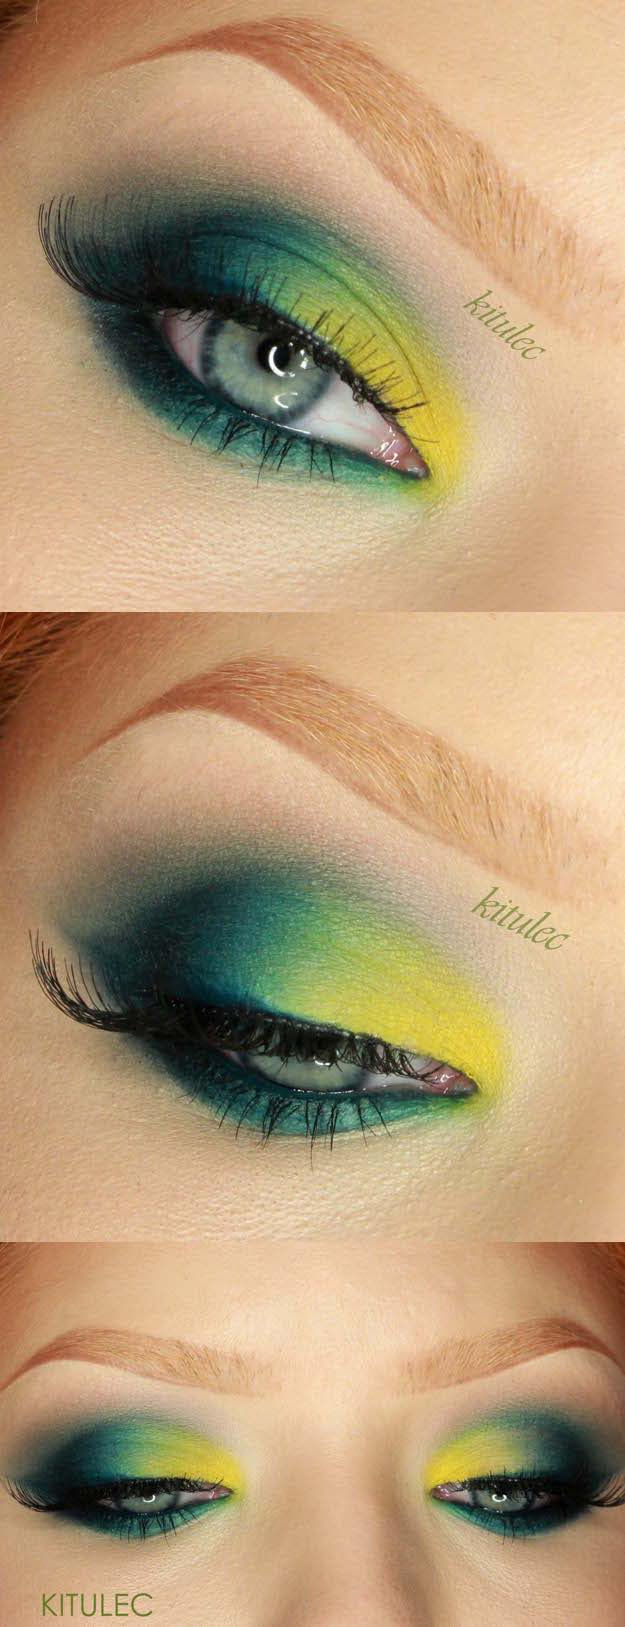 Makeup Tutorials For Green Eyes 50 Perfect Makeup Tutorials For Green Eyes The Goddess